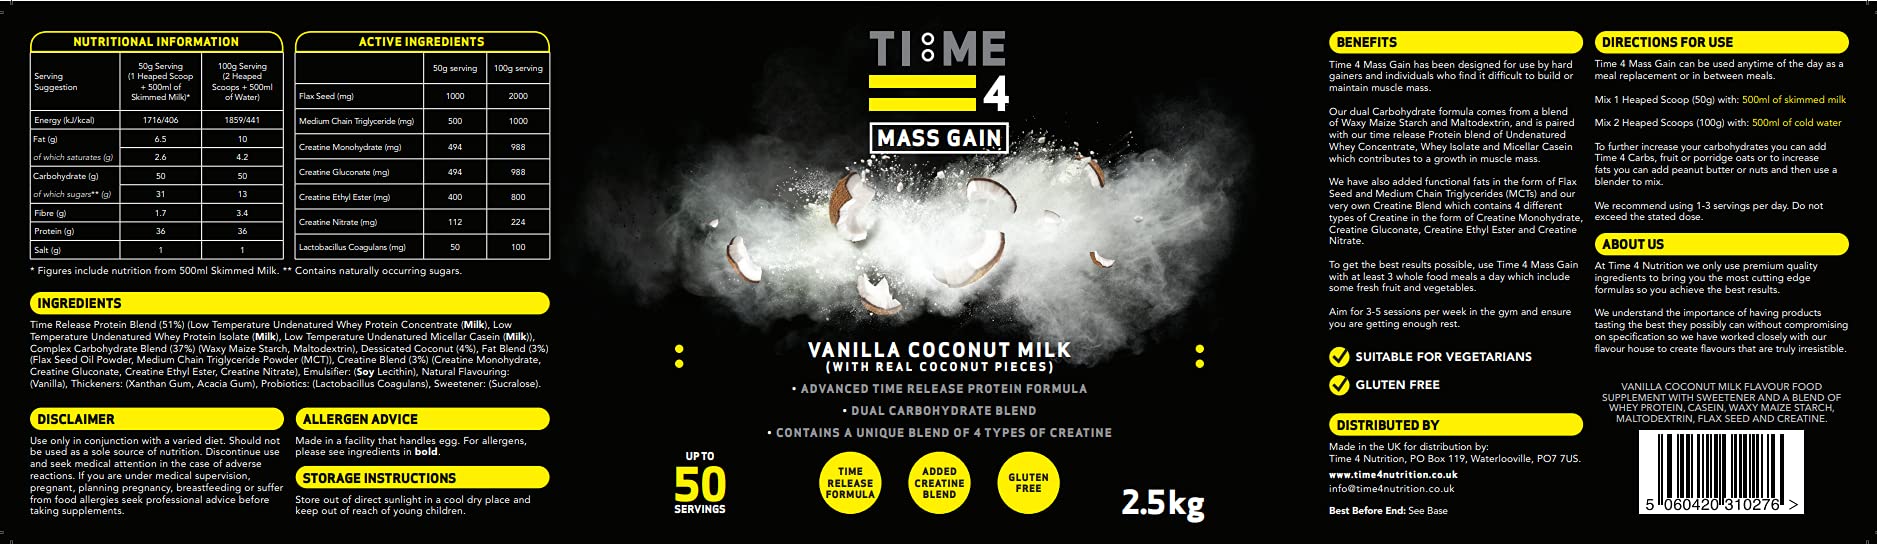 Time 4 Nutrition Time 4 Mass Gain 2.5kg Best Value Protein Supplement Powder at MYSUPPLEMENTSHOP.co.uk